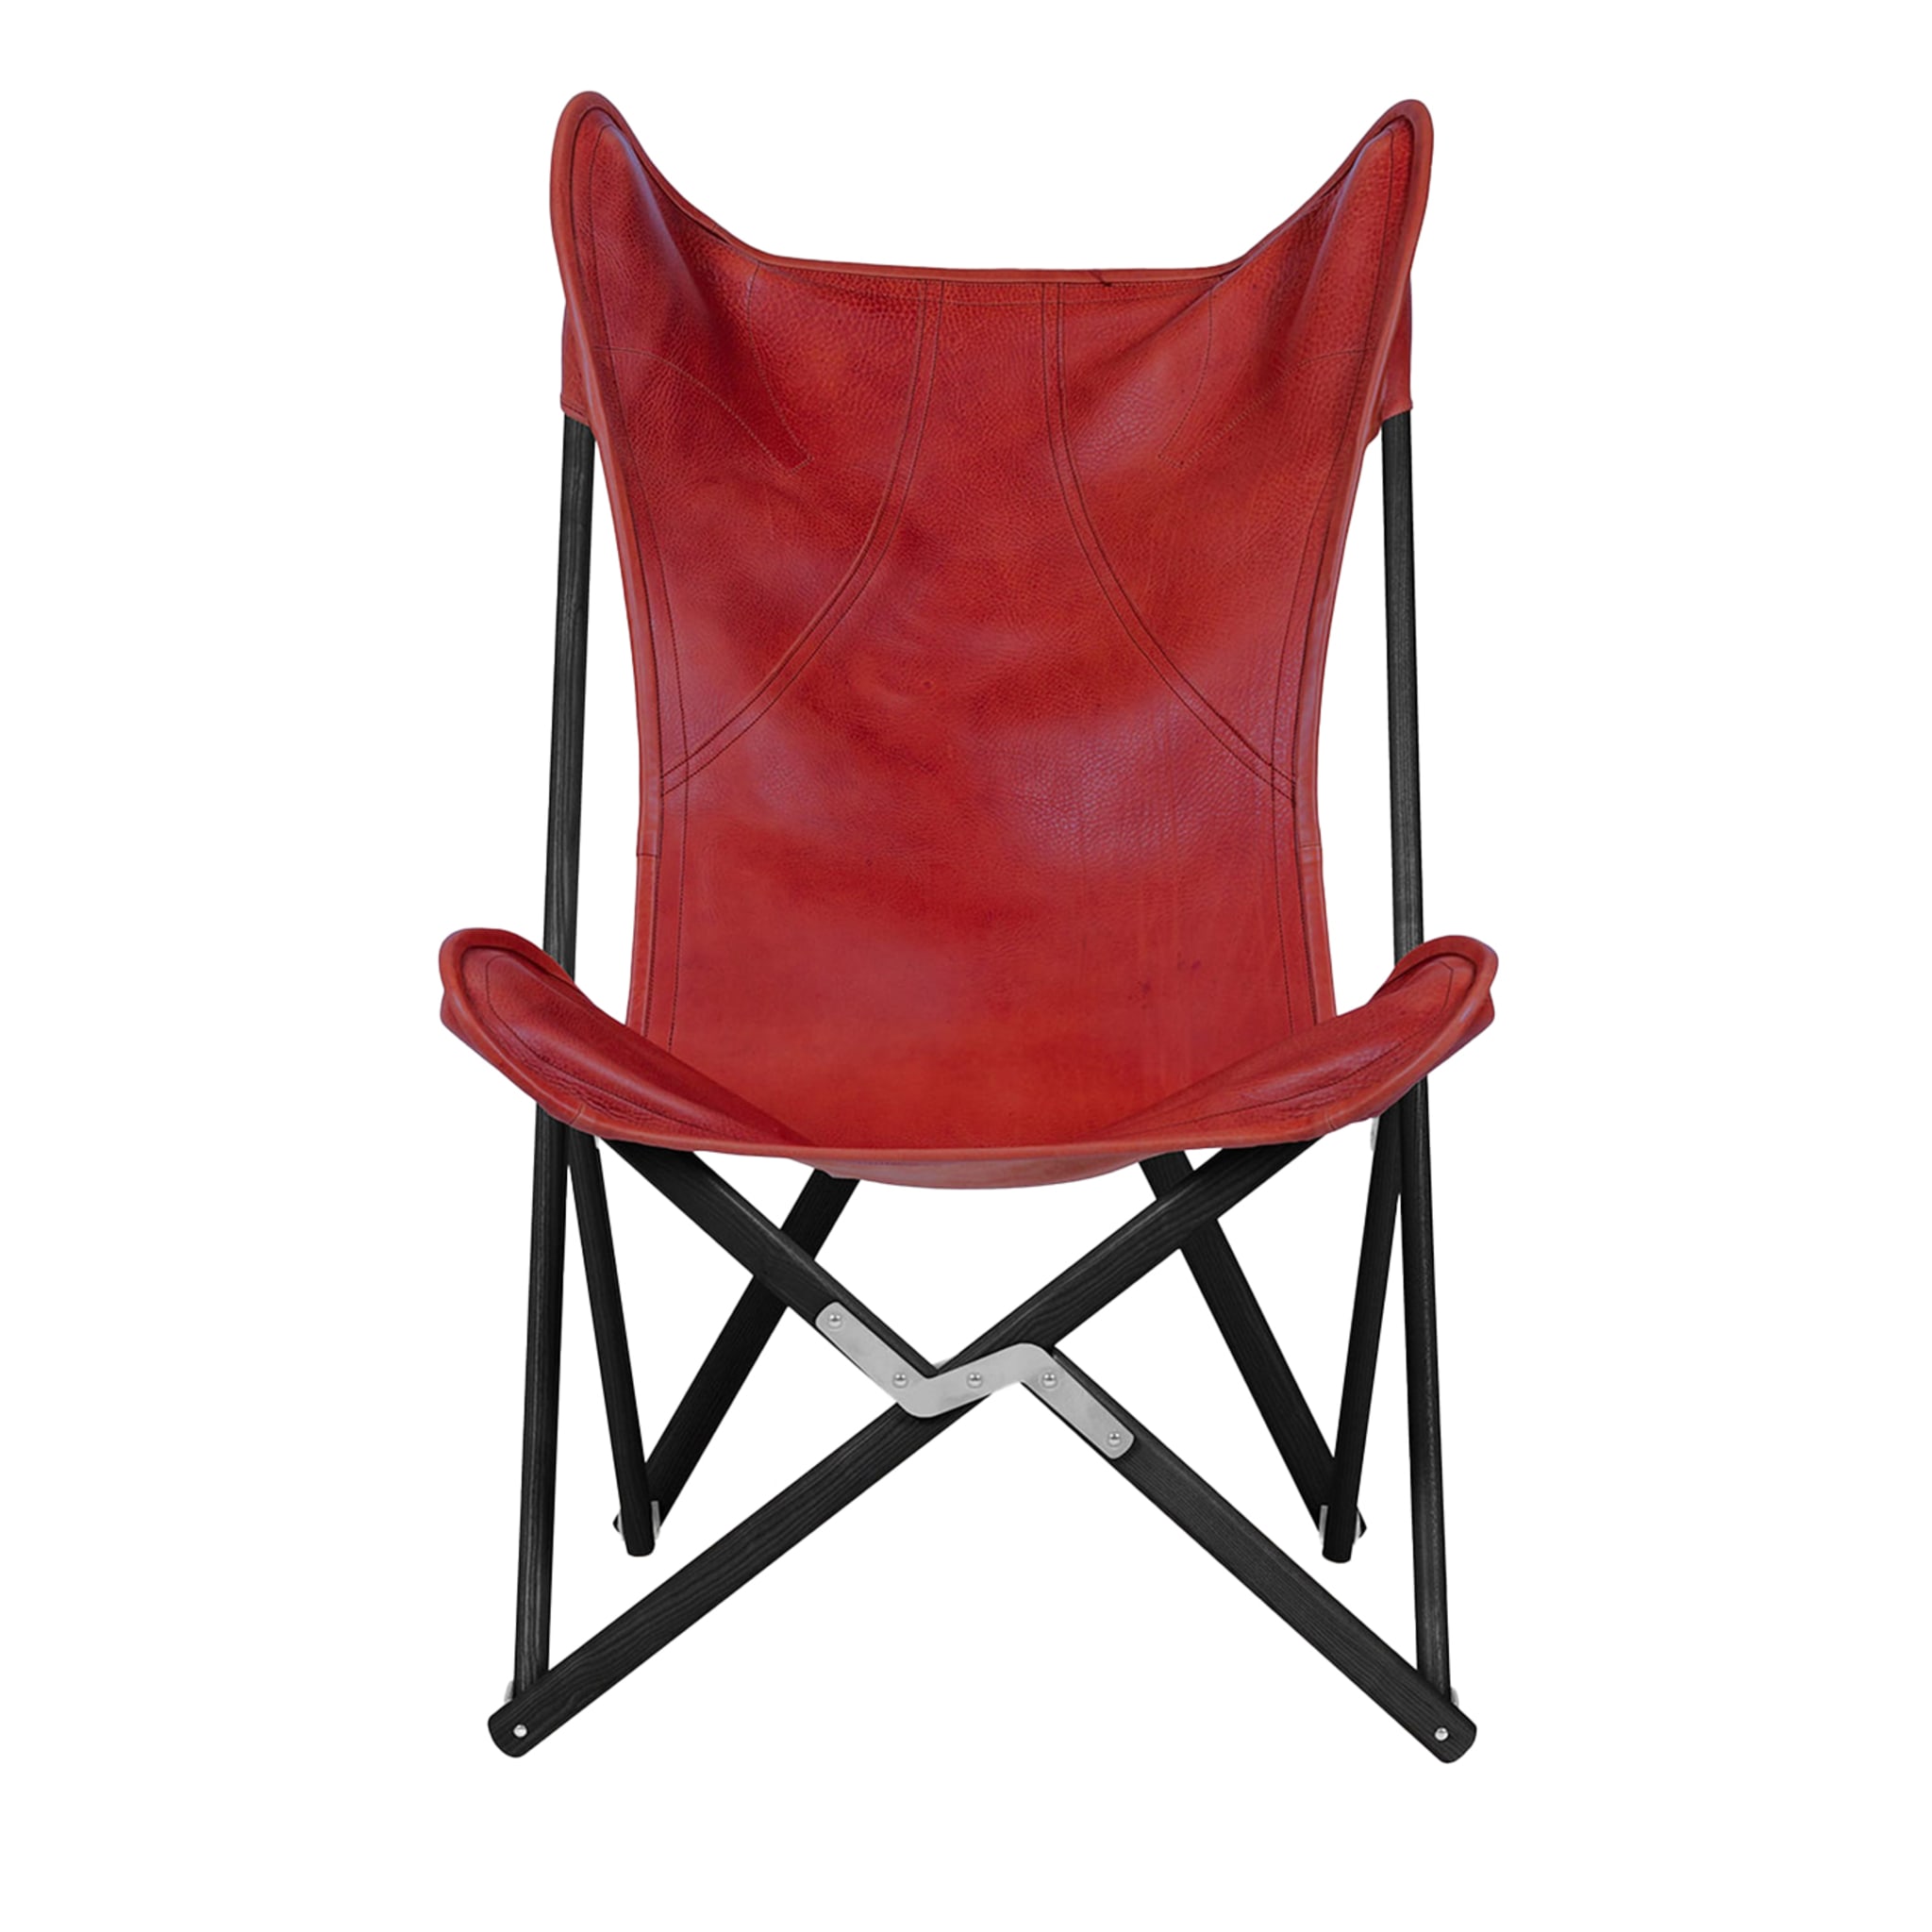 Tripolina Sessel aus rotem Leder - Hauptansicht